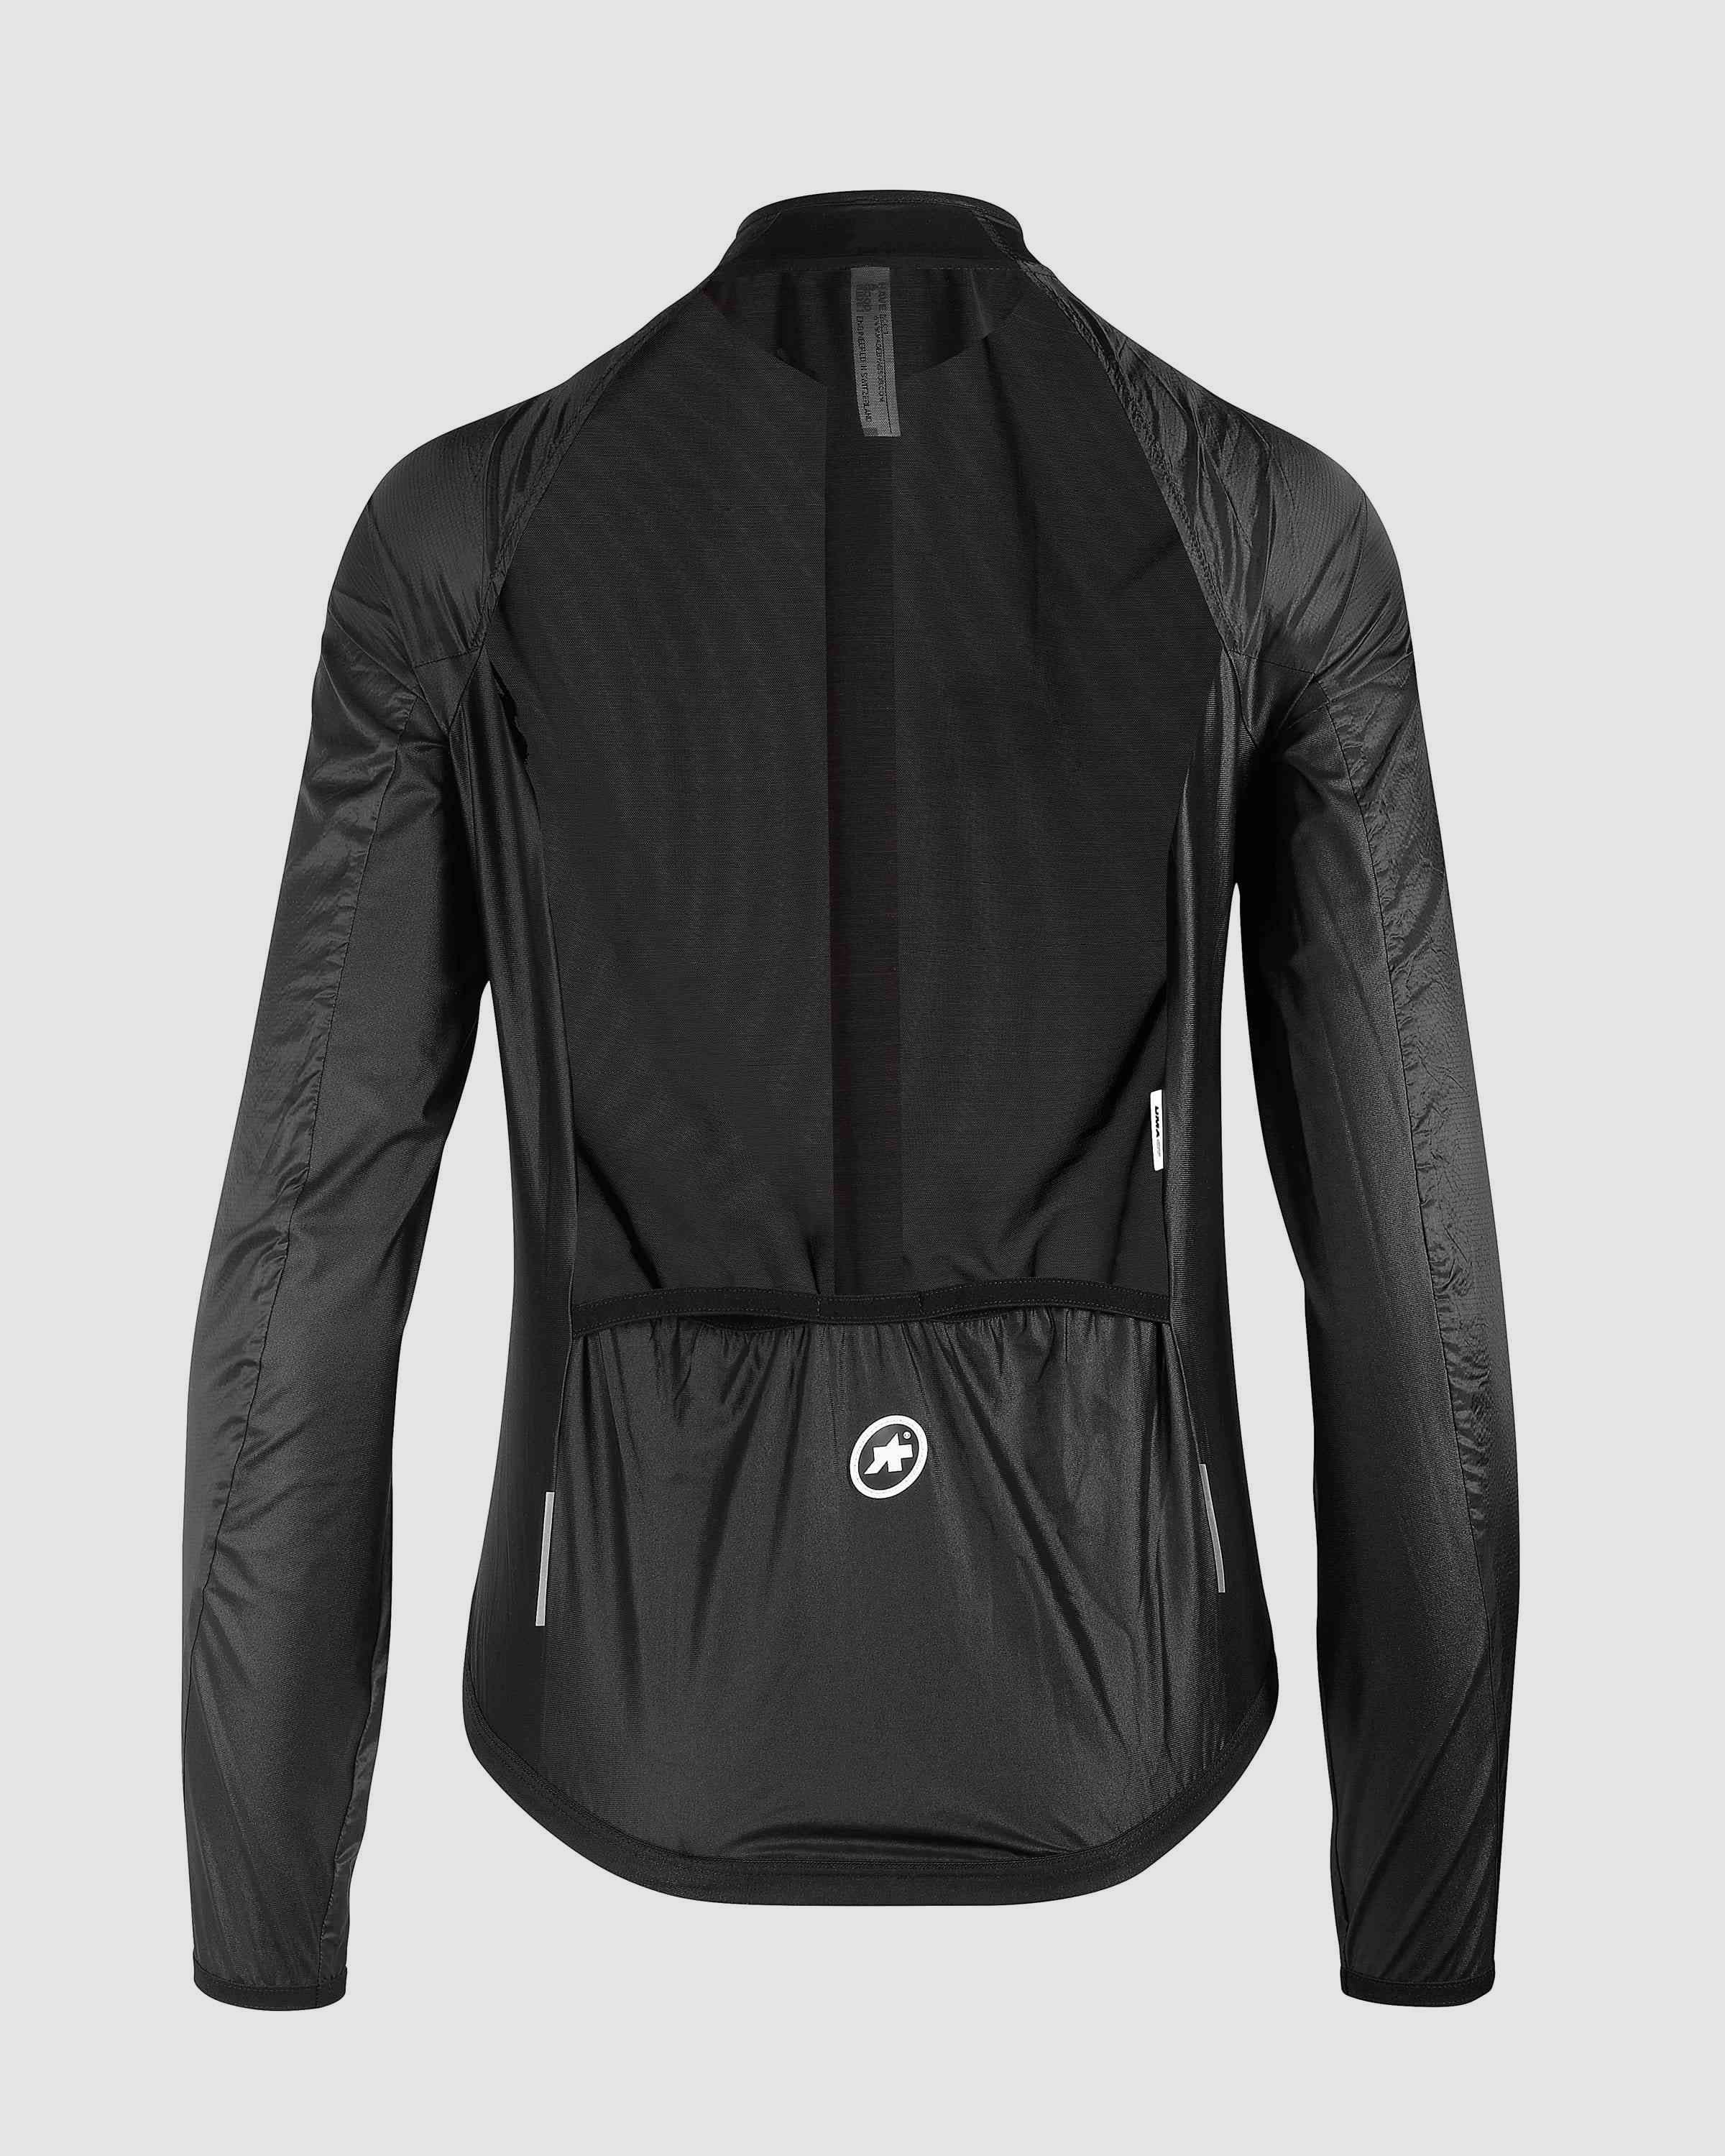 UMA GT wind jacket, blackSeries » ASSOS Of Switzerland